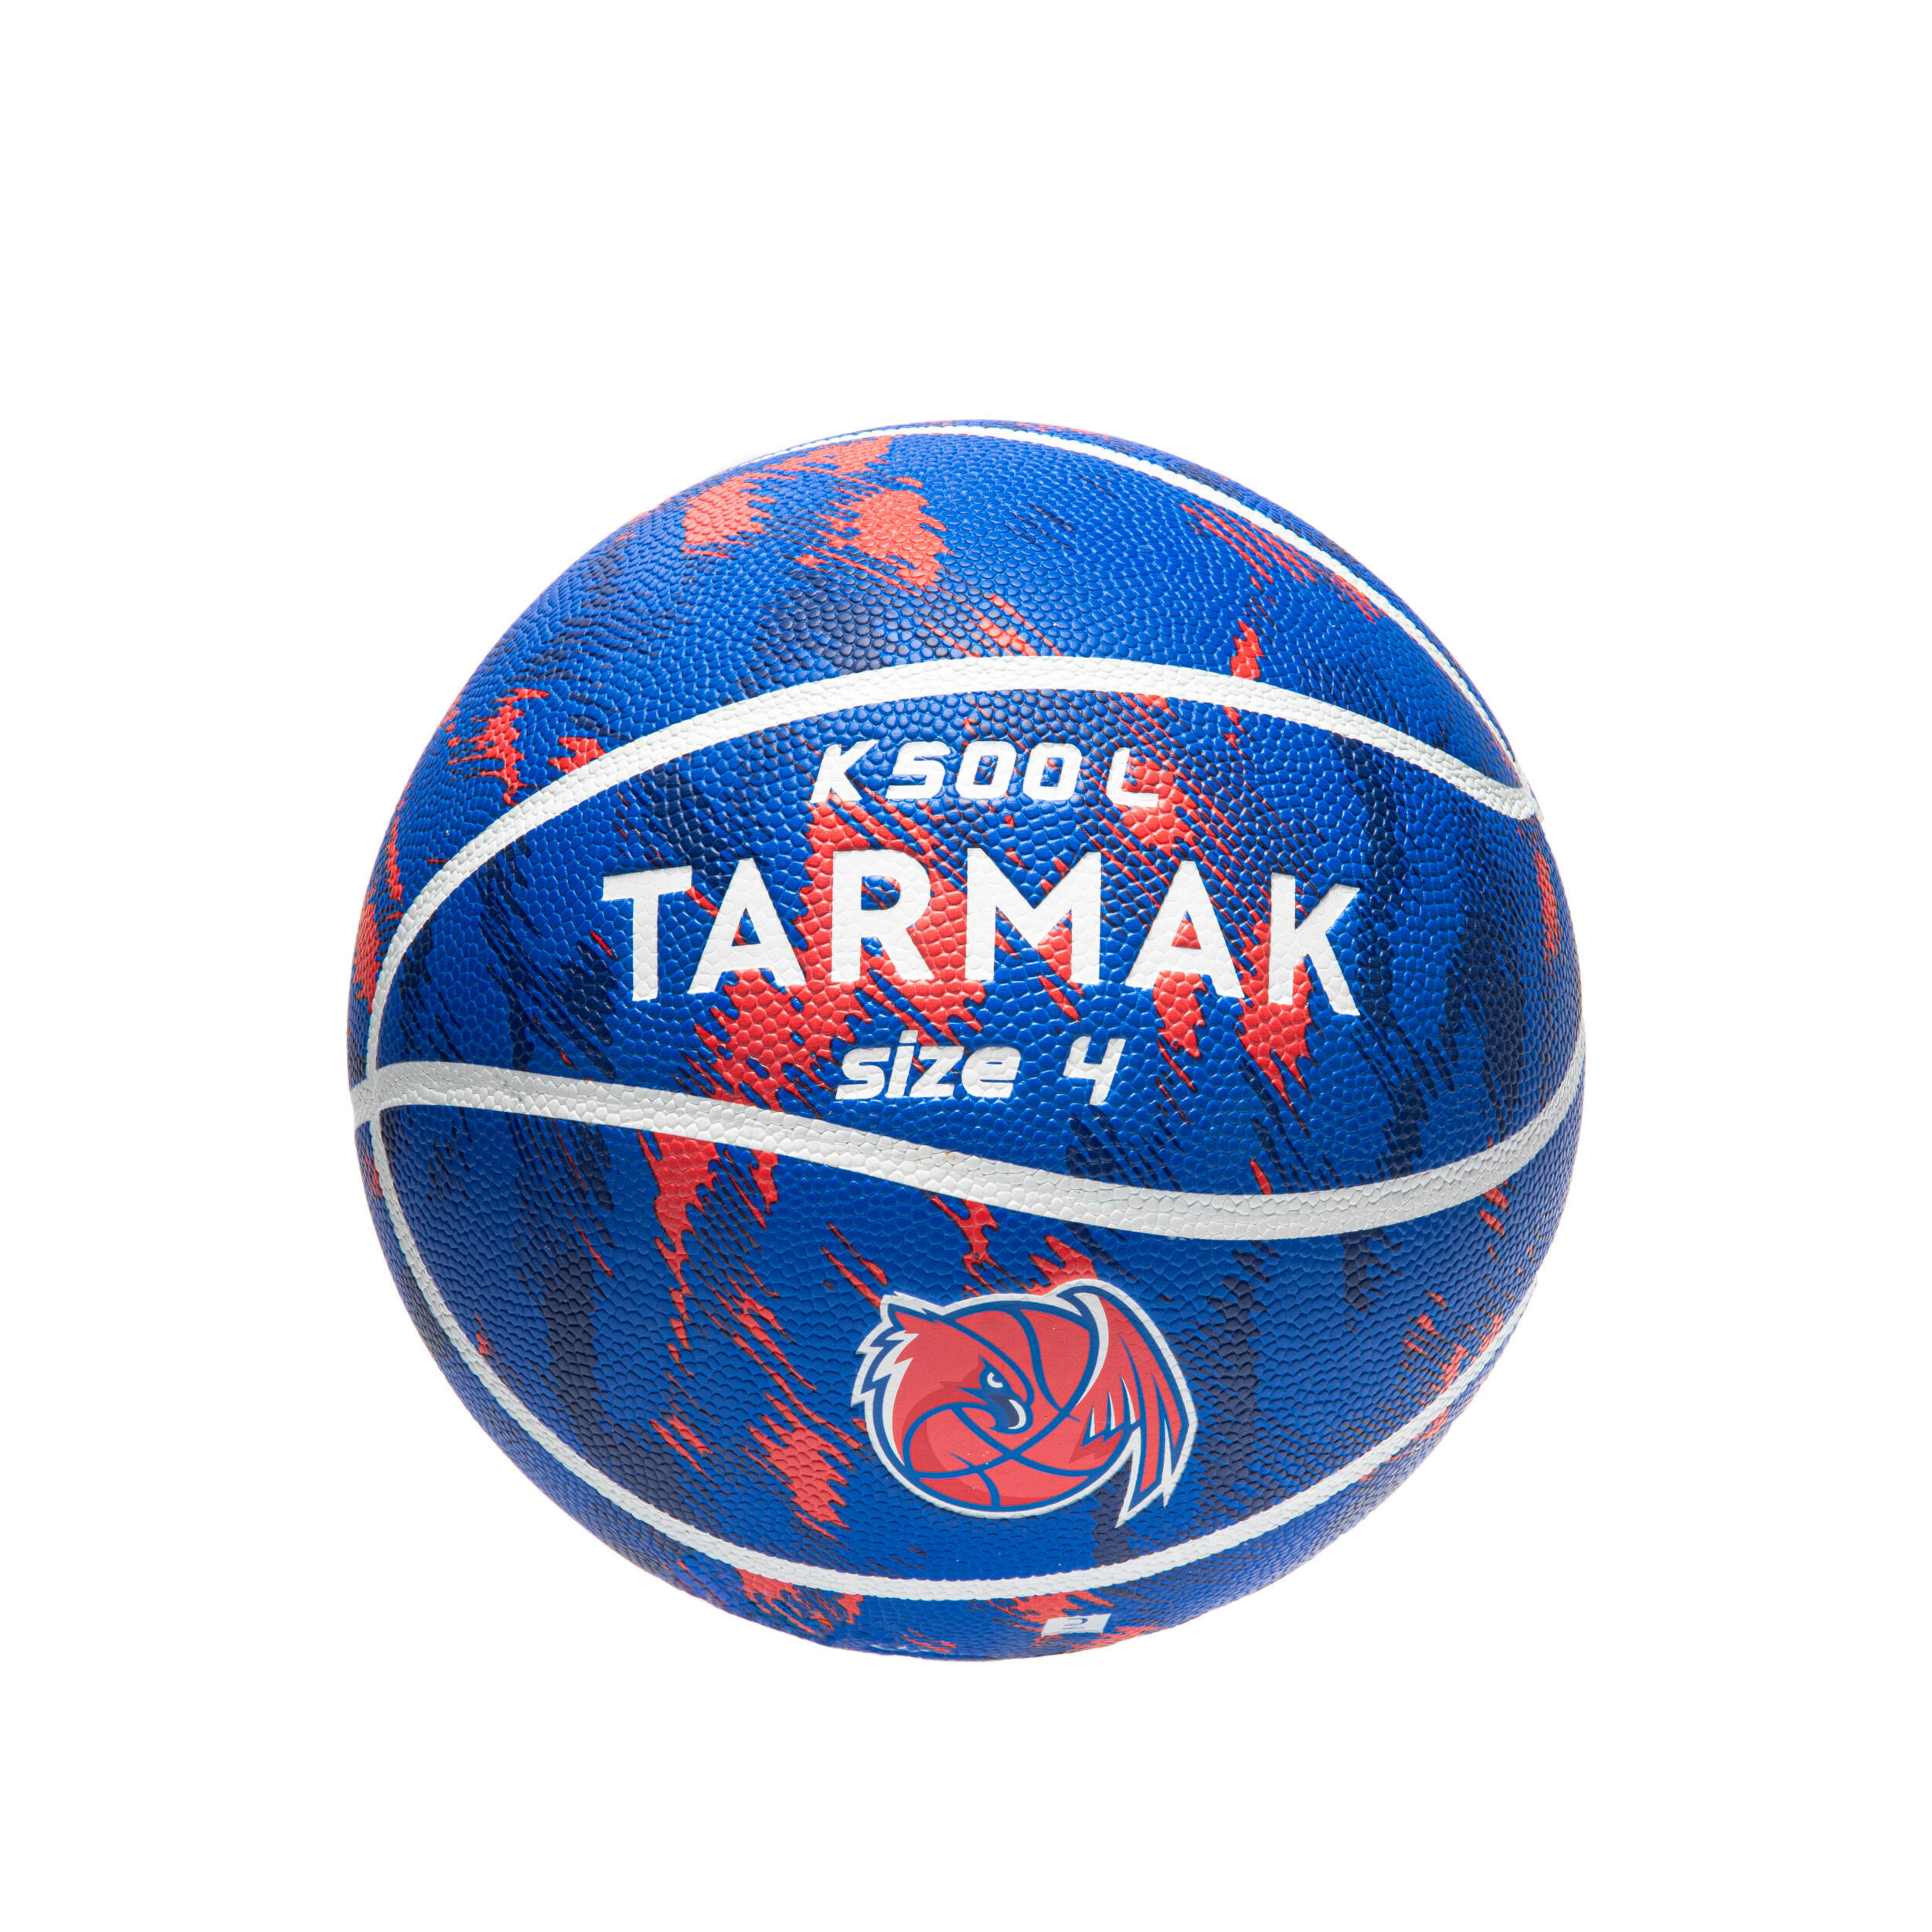 Kids' Size 4 Basketball K500 - Blue/Orange 1/8